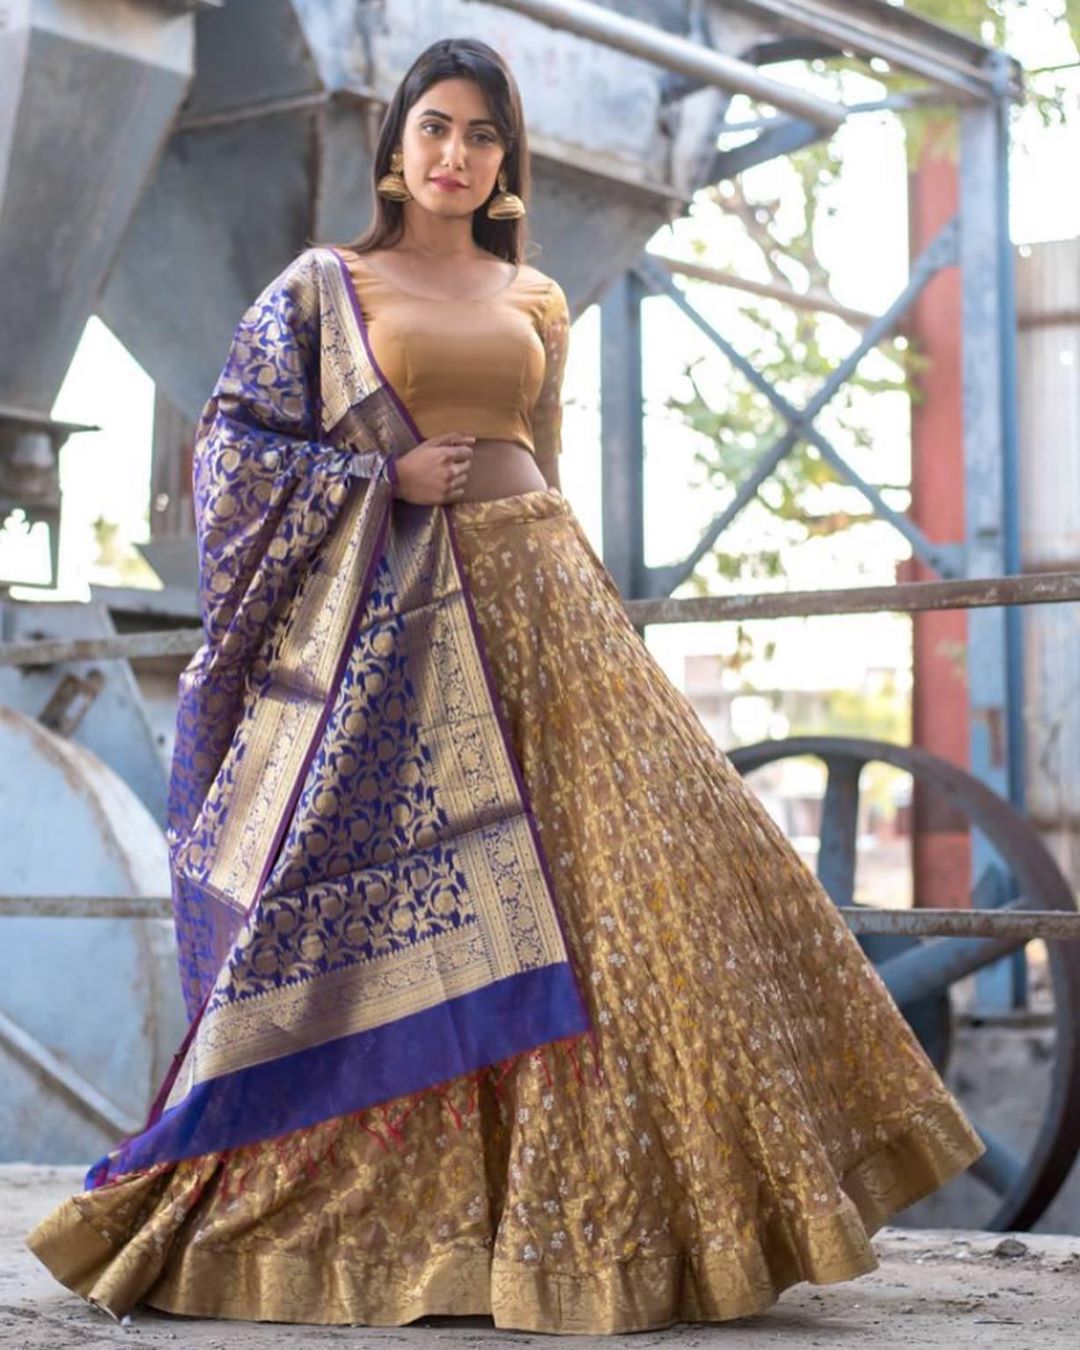 Mirraw - Shop the pretty beige woven art silk bandhani lehenga on @mirraw
Product ID:2943292
check out the collection on our store.
.
.
#lehenga #lehengacholi #lehengalove #bandhani #traditional #indi...